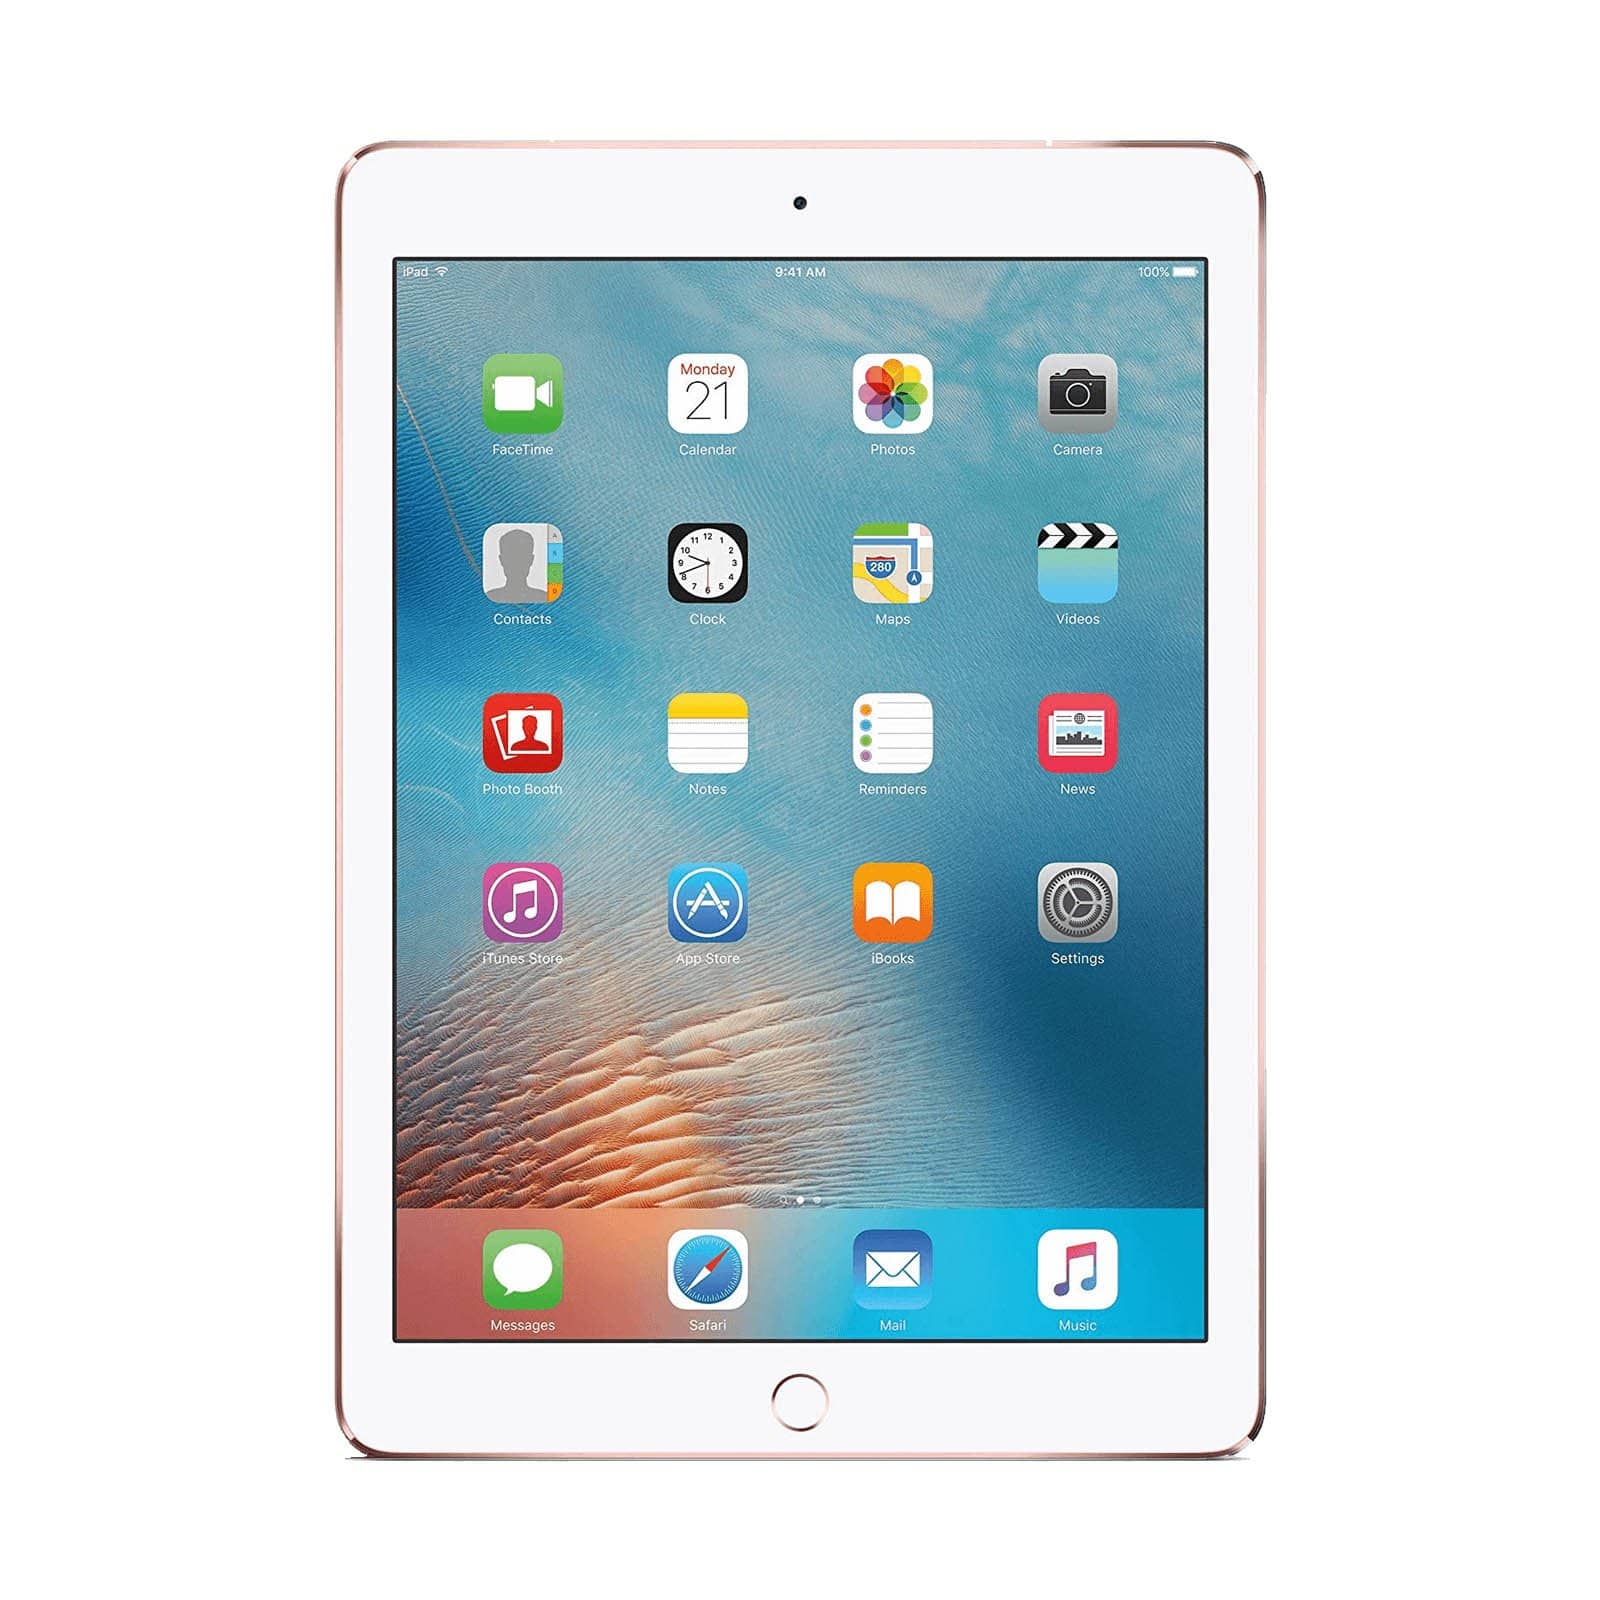 iPad Pro 9.7 Inch 256GB Gold Pristine - WiFi